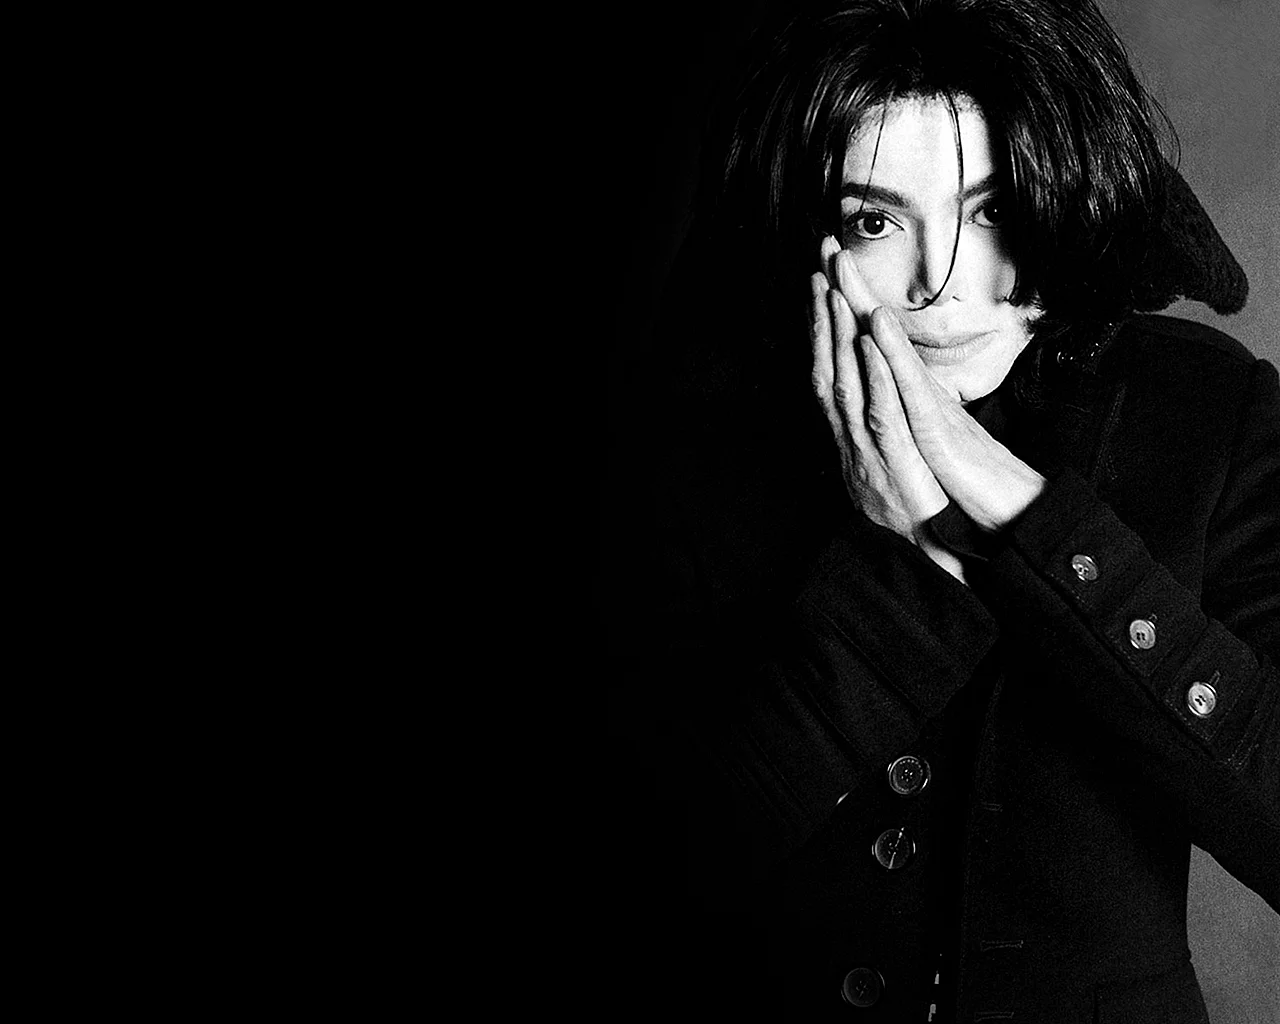 Michael Jackson Wallpaper